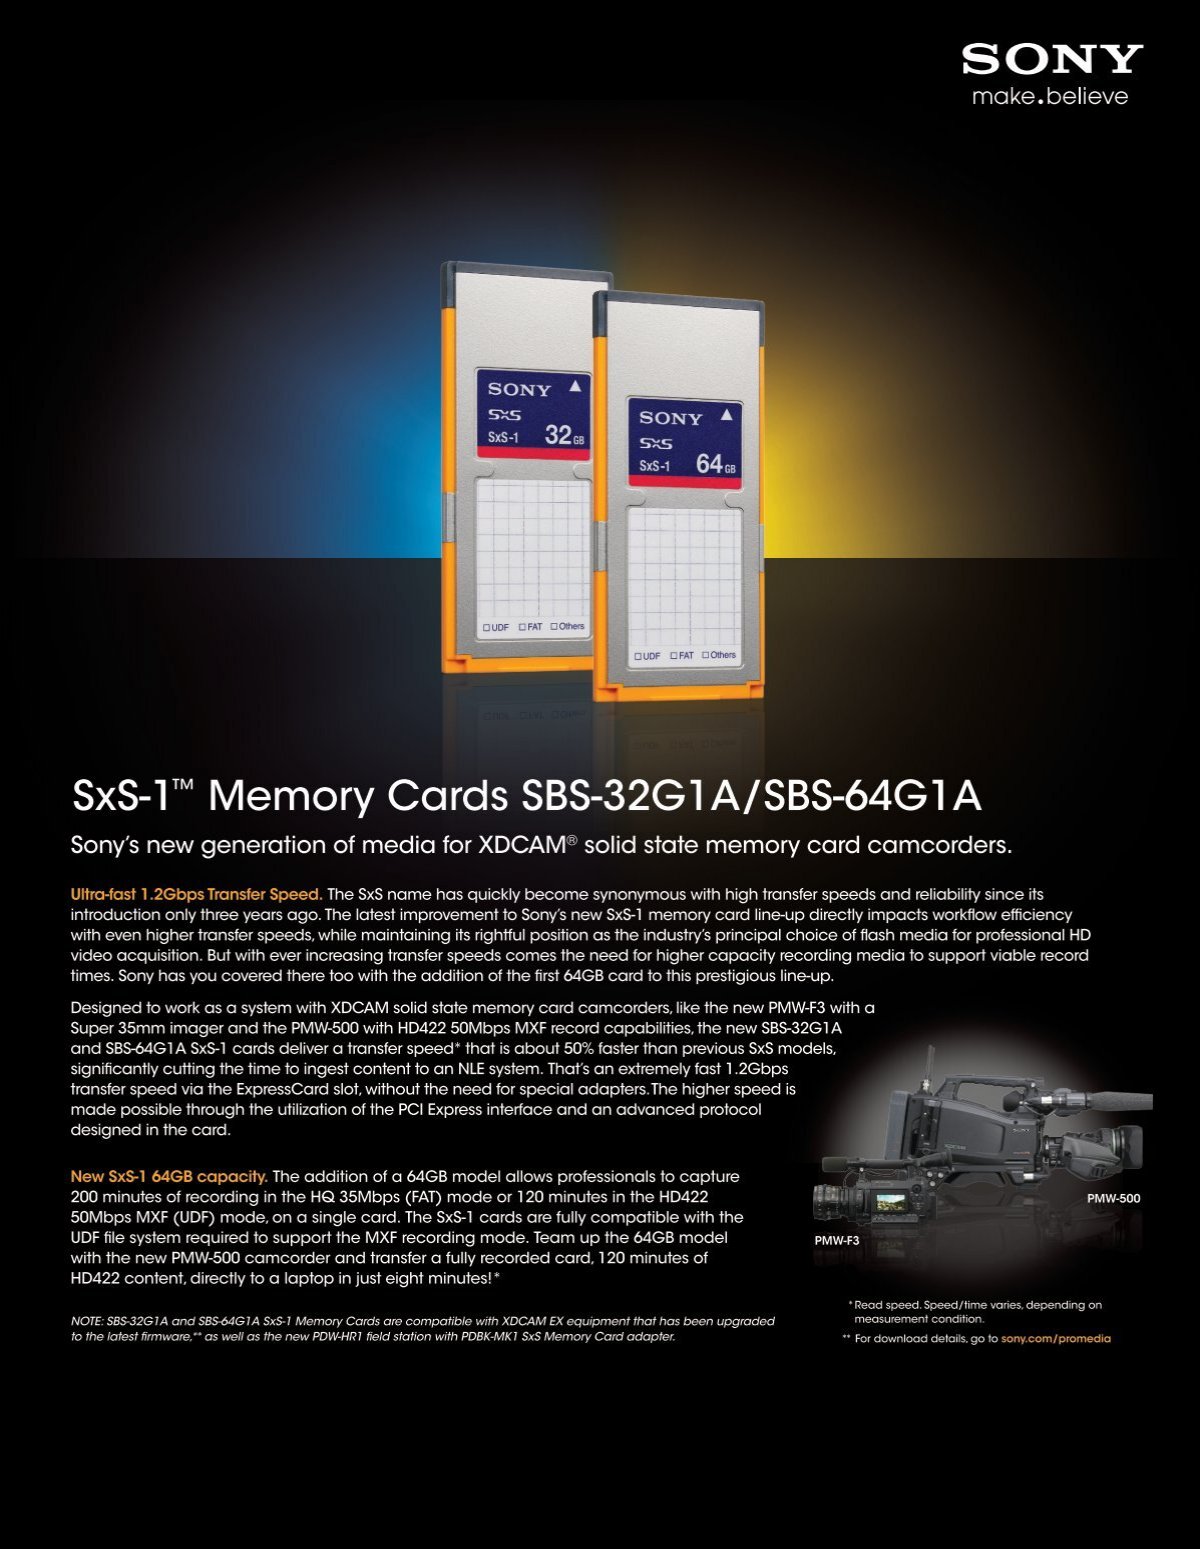 SxS-1™ Memory Cards SBS-32G1A/SBS-64G1A - Sony